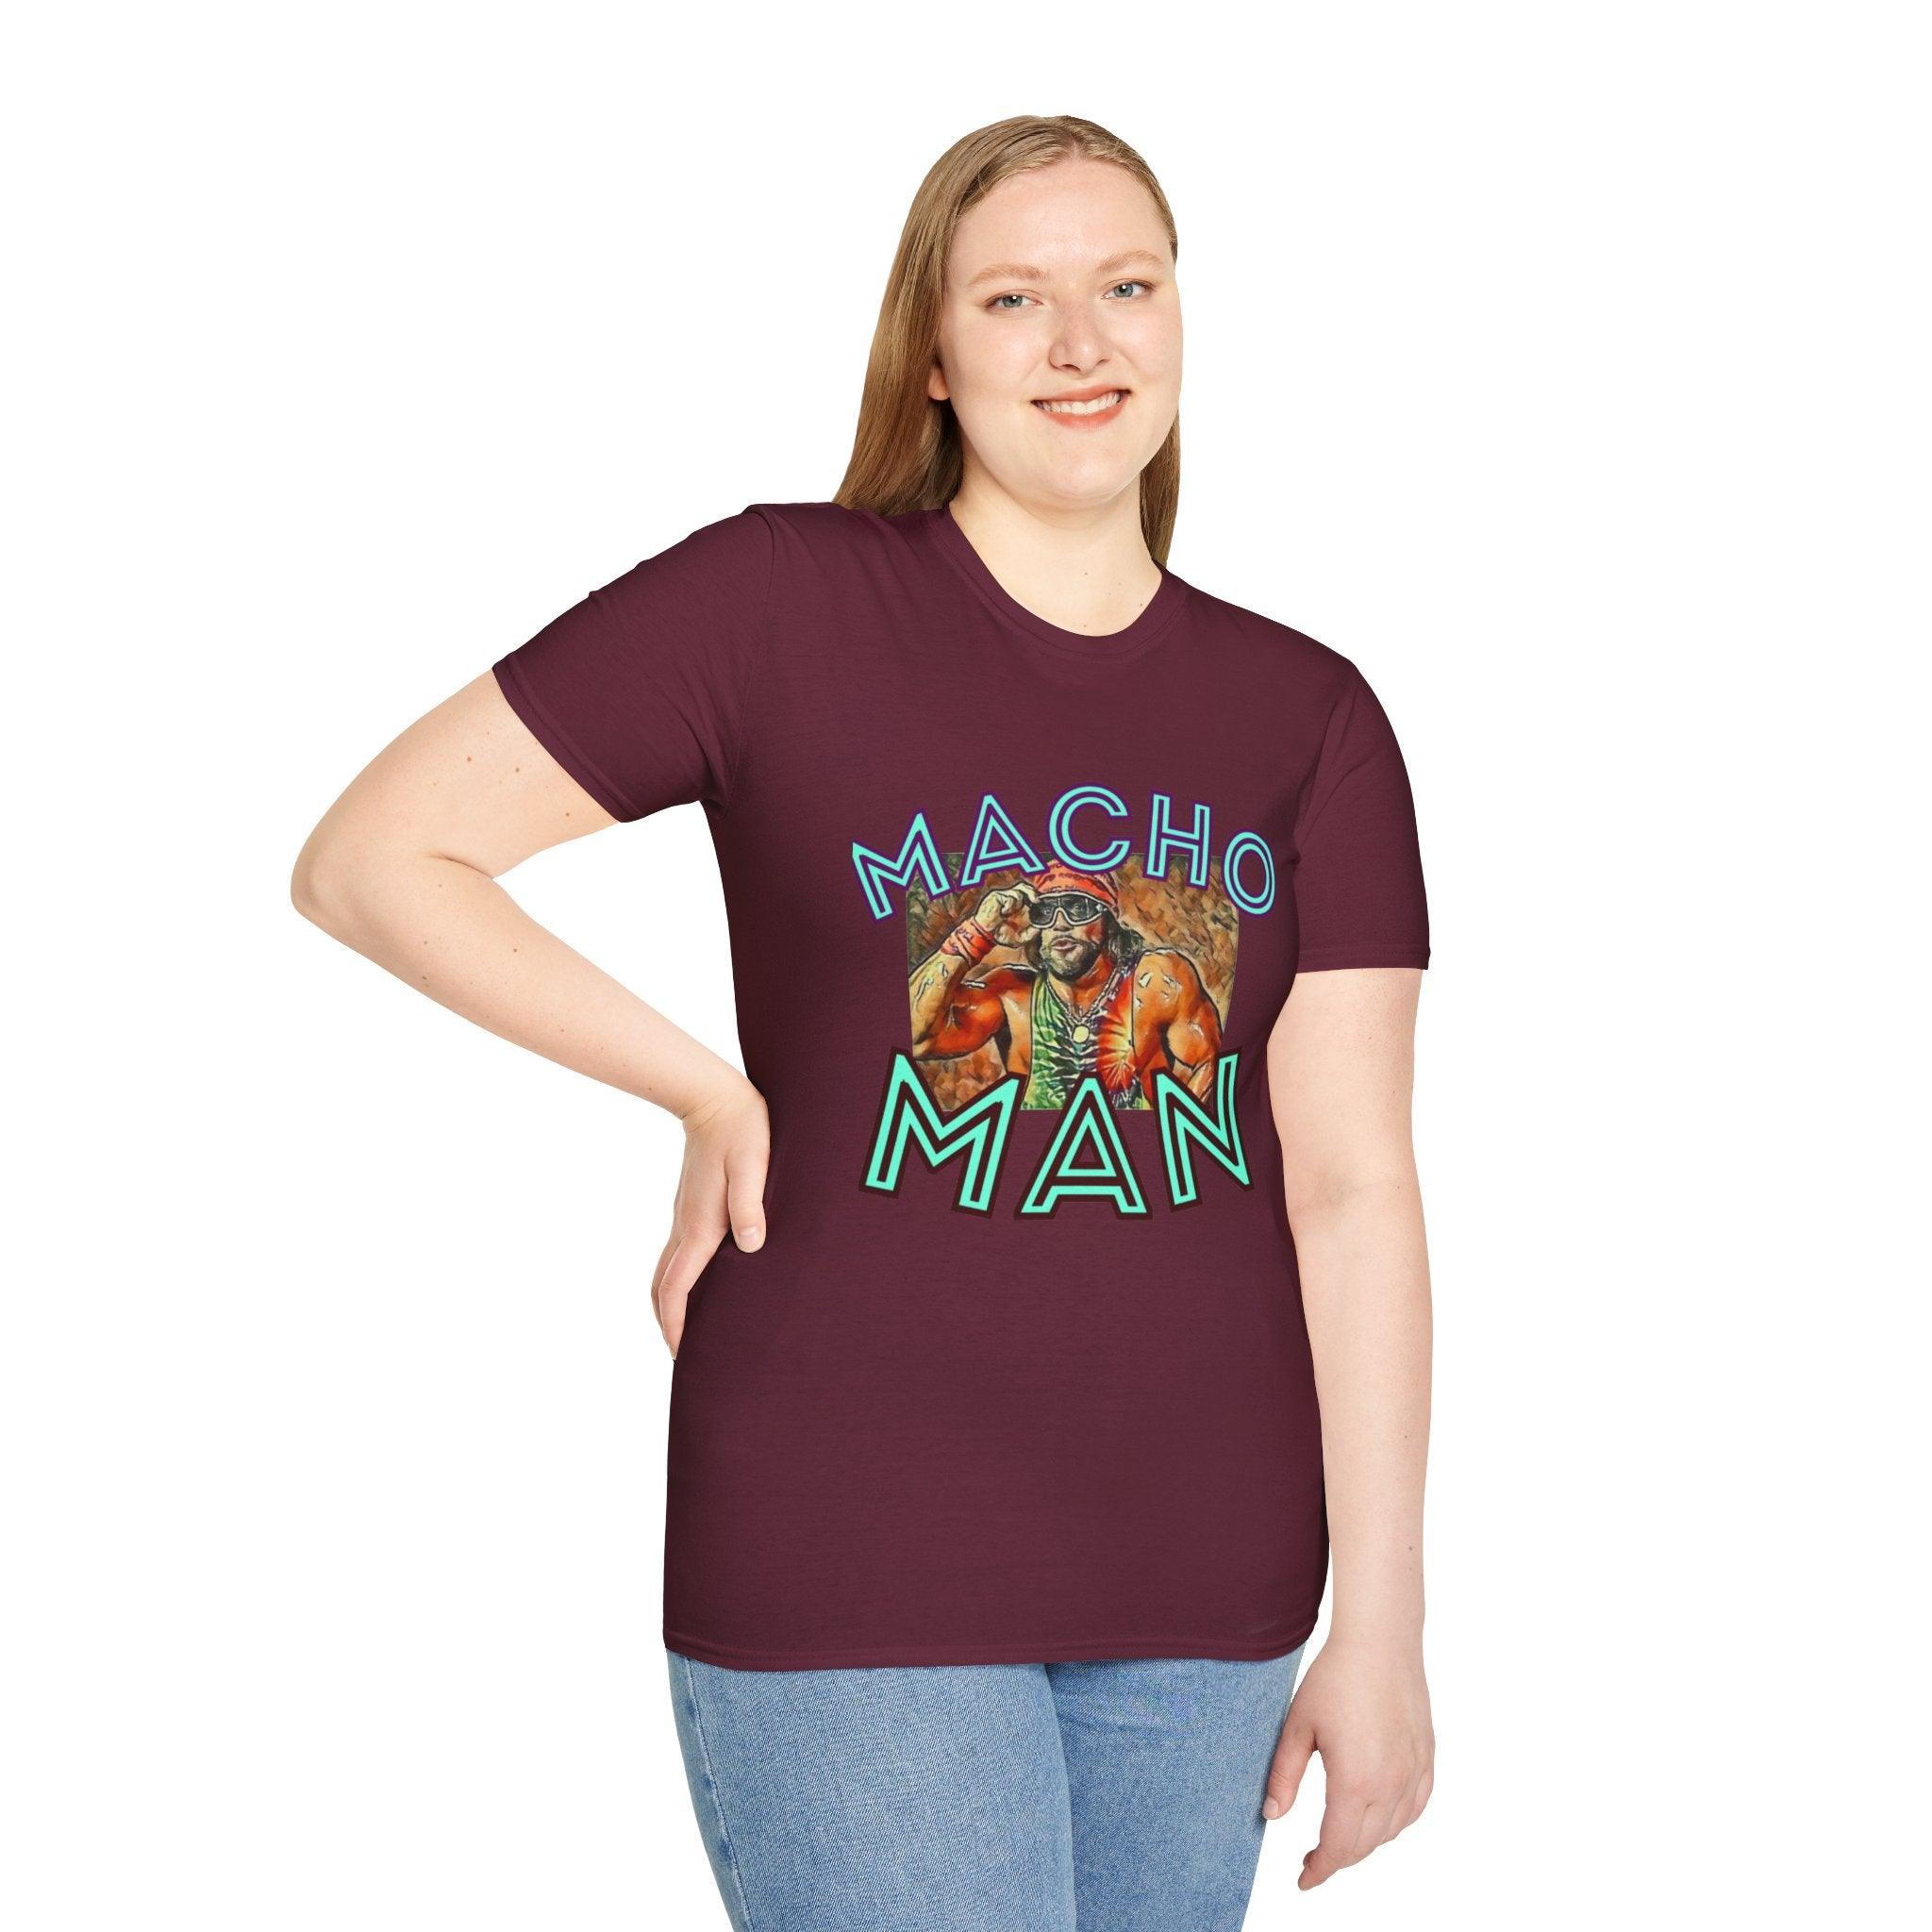 Mach Man Randy Savage T-shirt - Epic Shirts 403